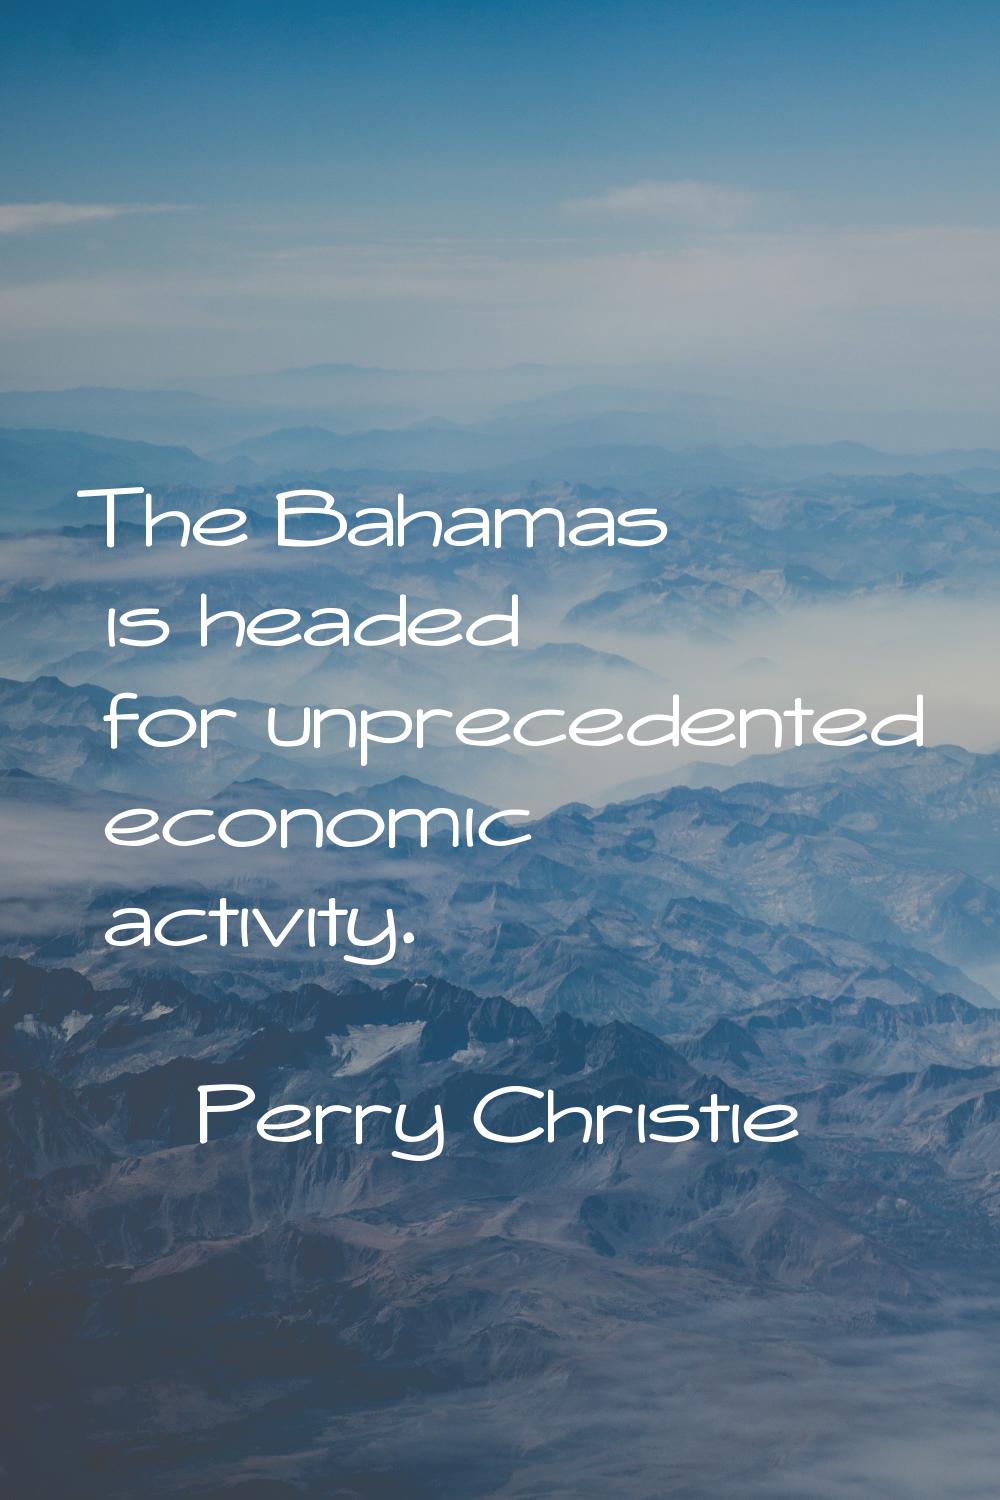 The Bahamas is headed for unprecedented economic activity.